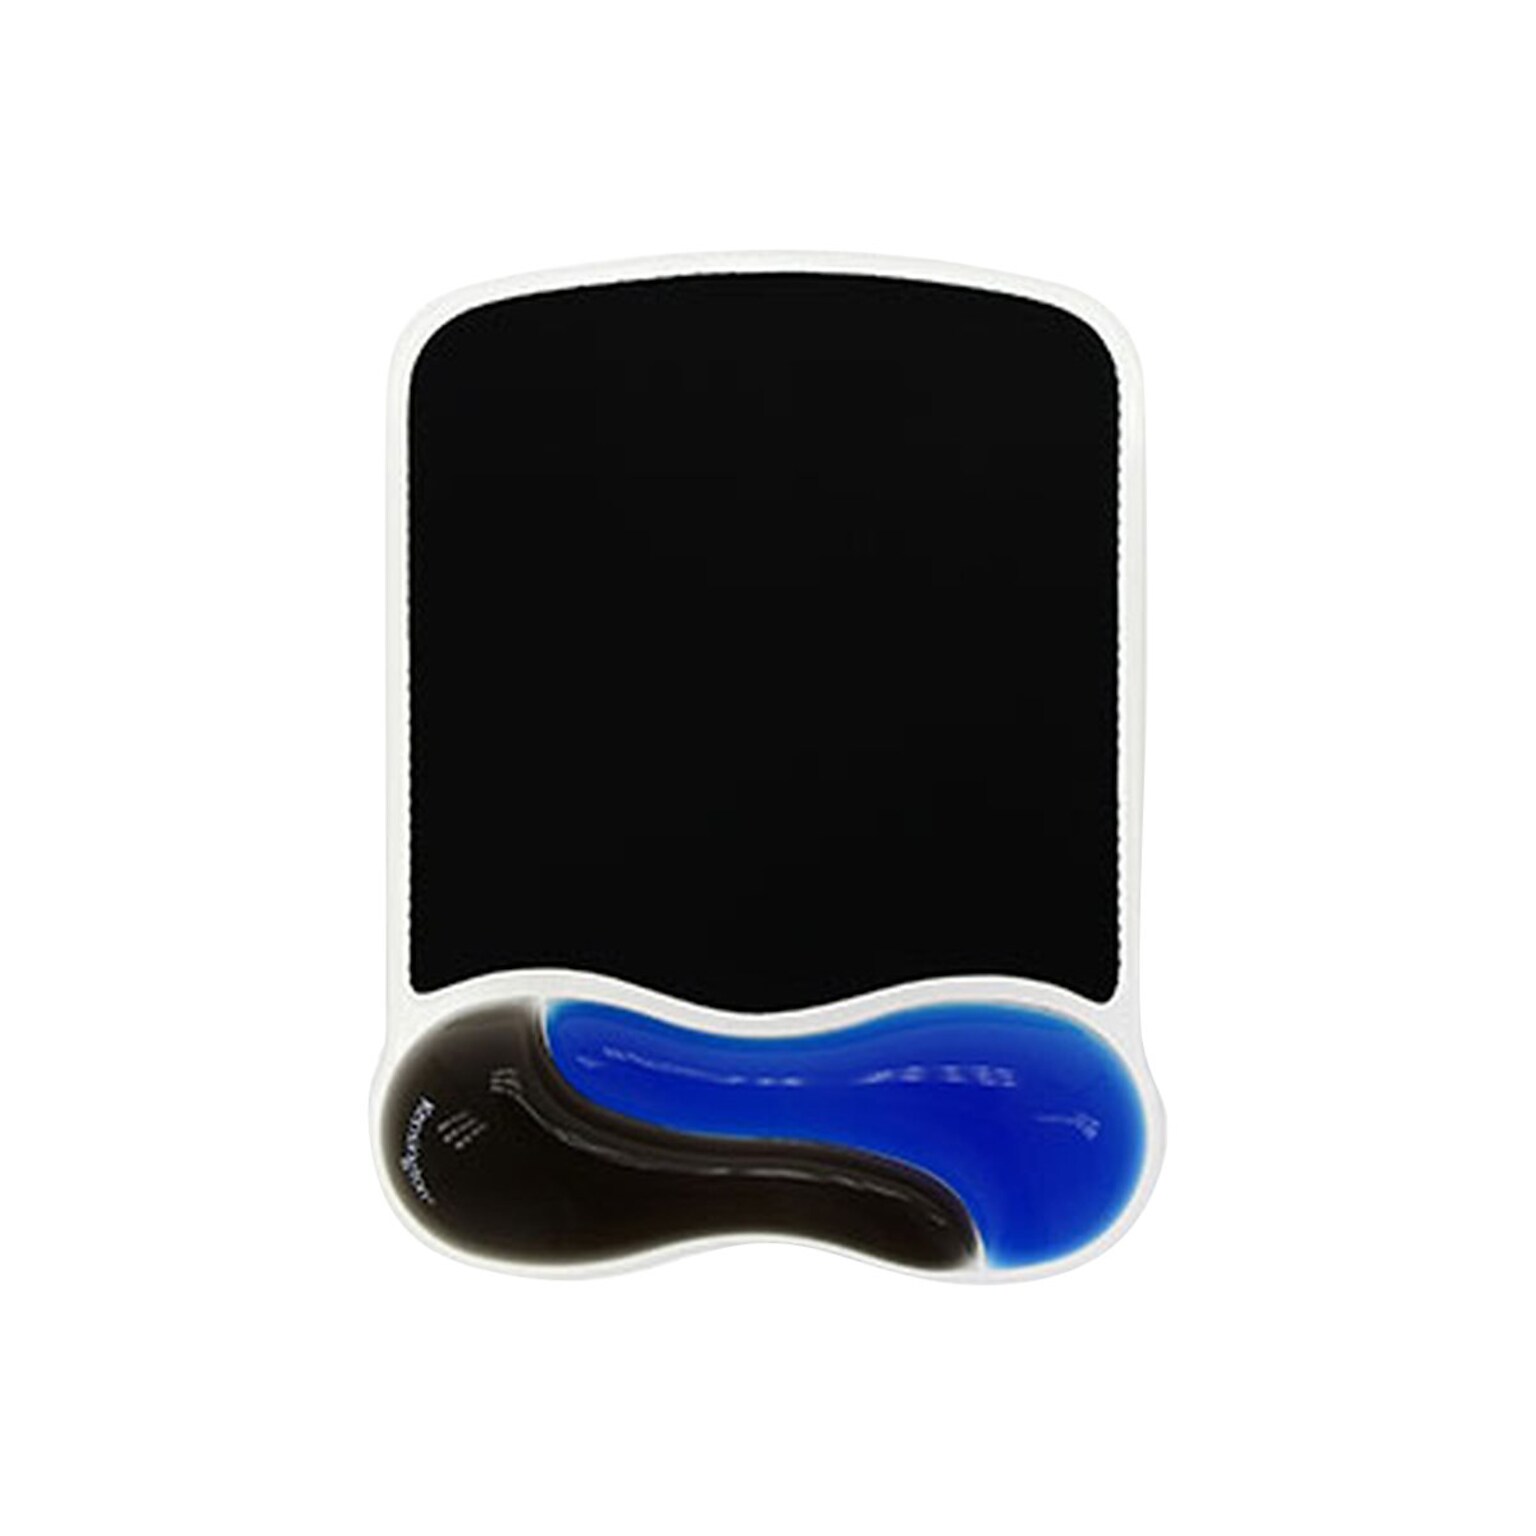 Kensington Duo Gel Mouse Pad, Black/Blue (62401)